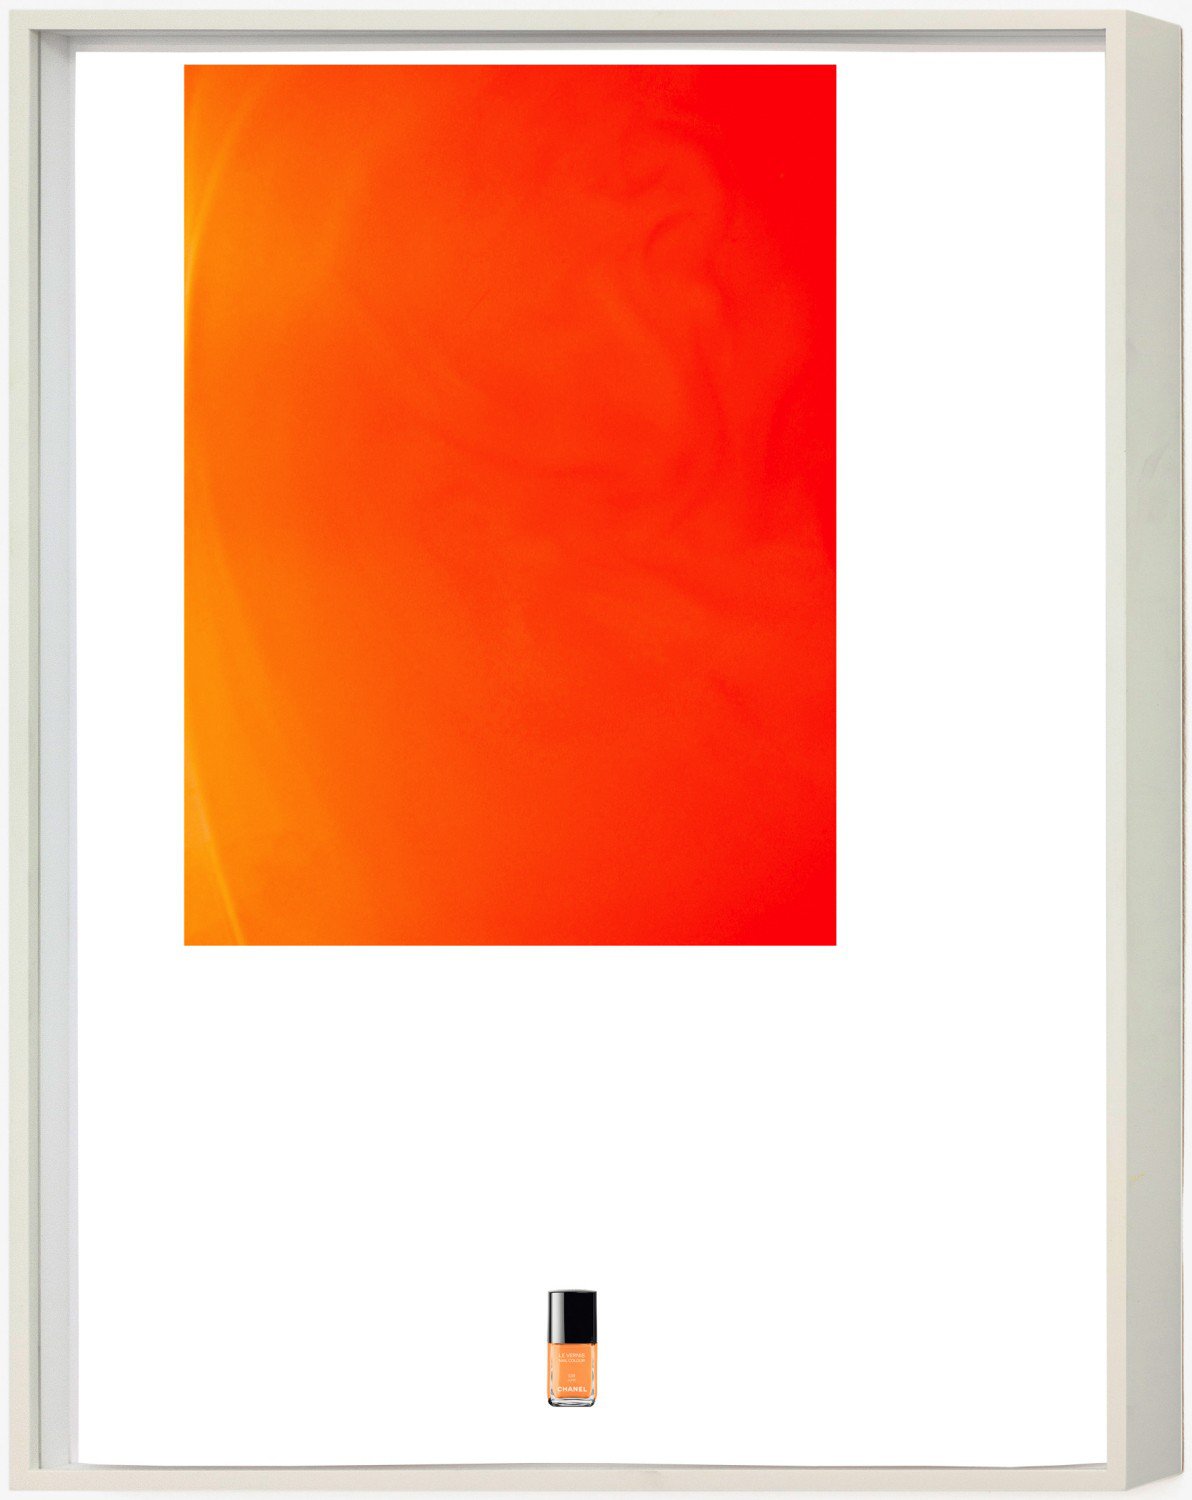 Lisa HolzerChanel 539 JUNE passing under Carrot Juice, 2013Pigment print on cotton paper88 x 68 cm